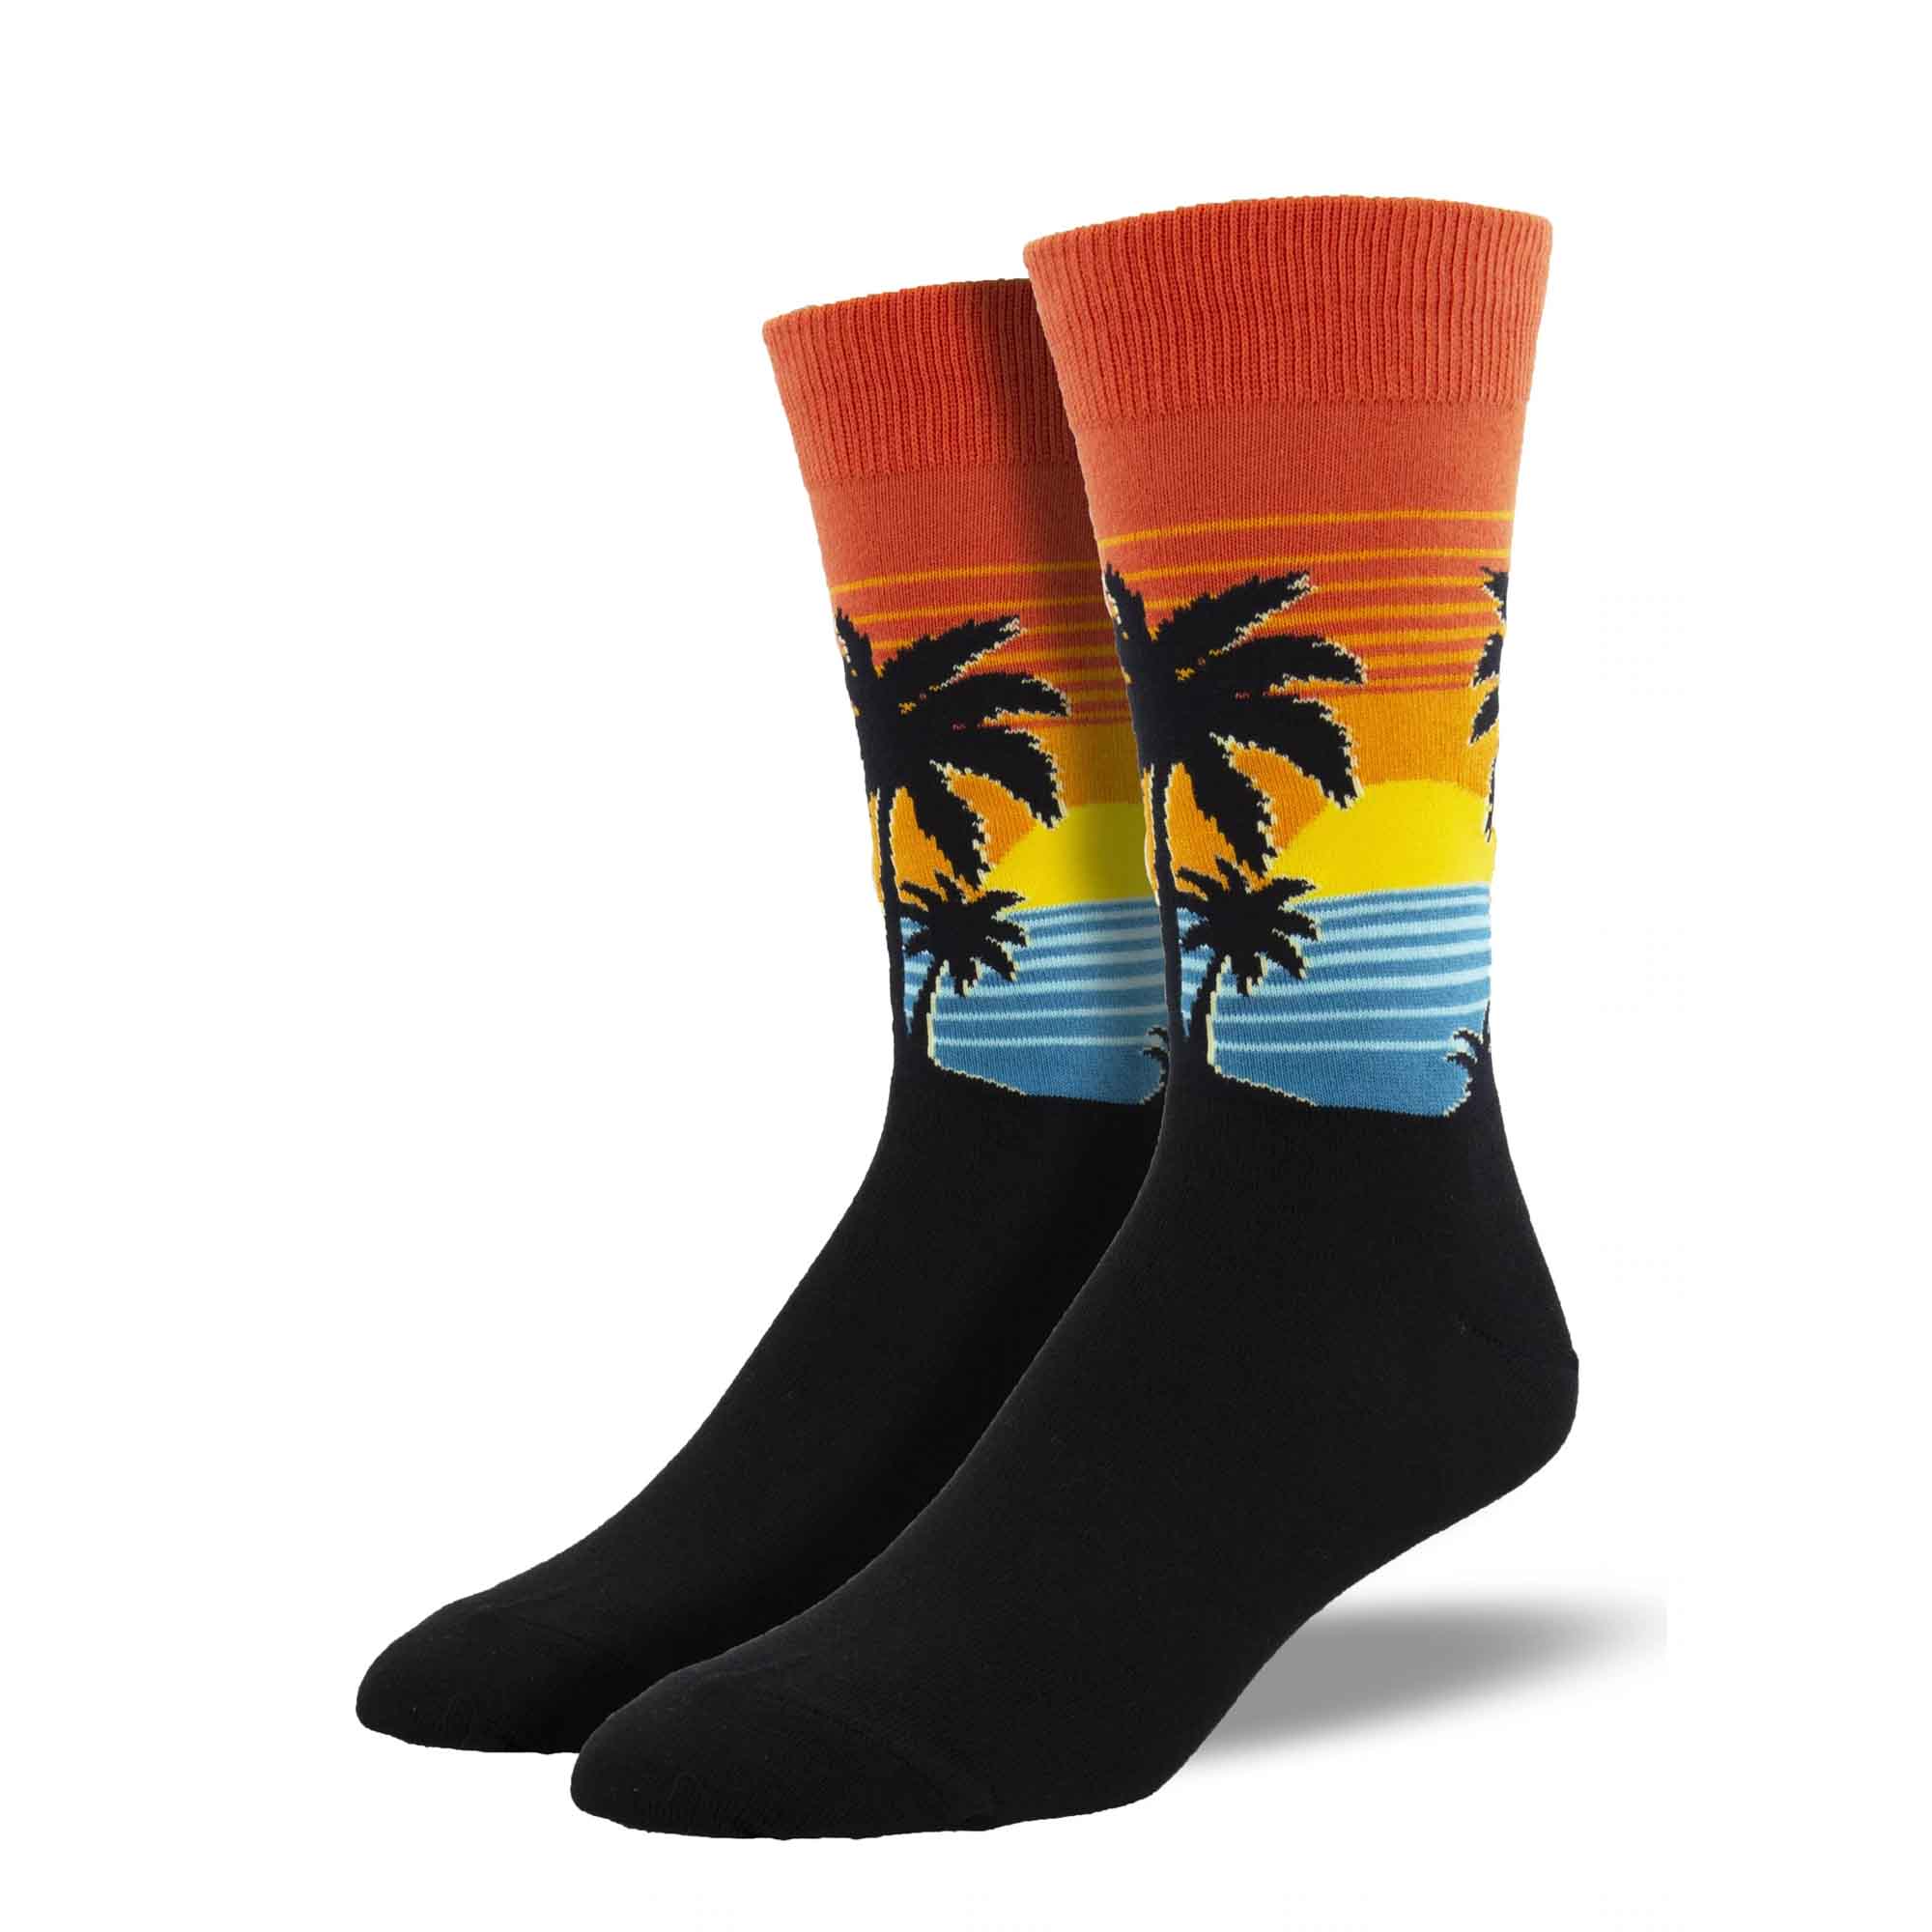 Find Your Beach Socks